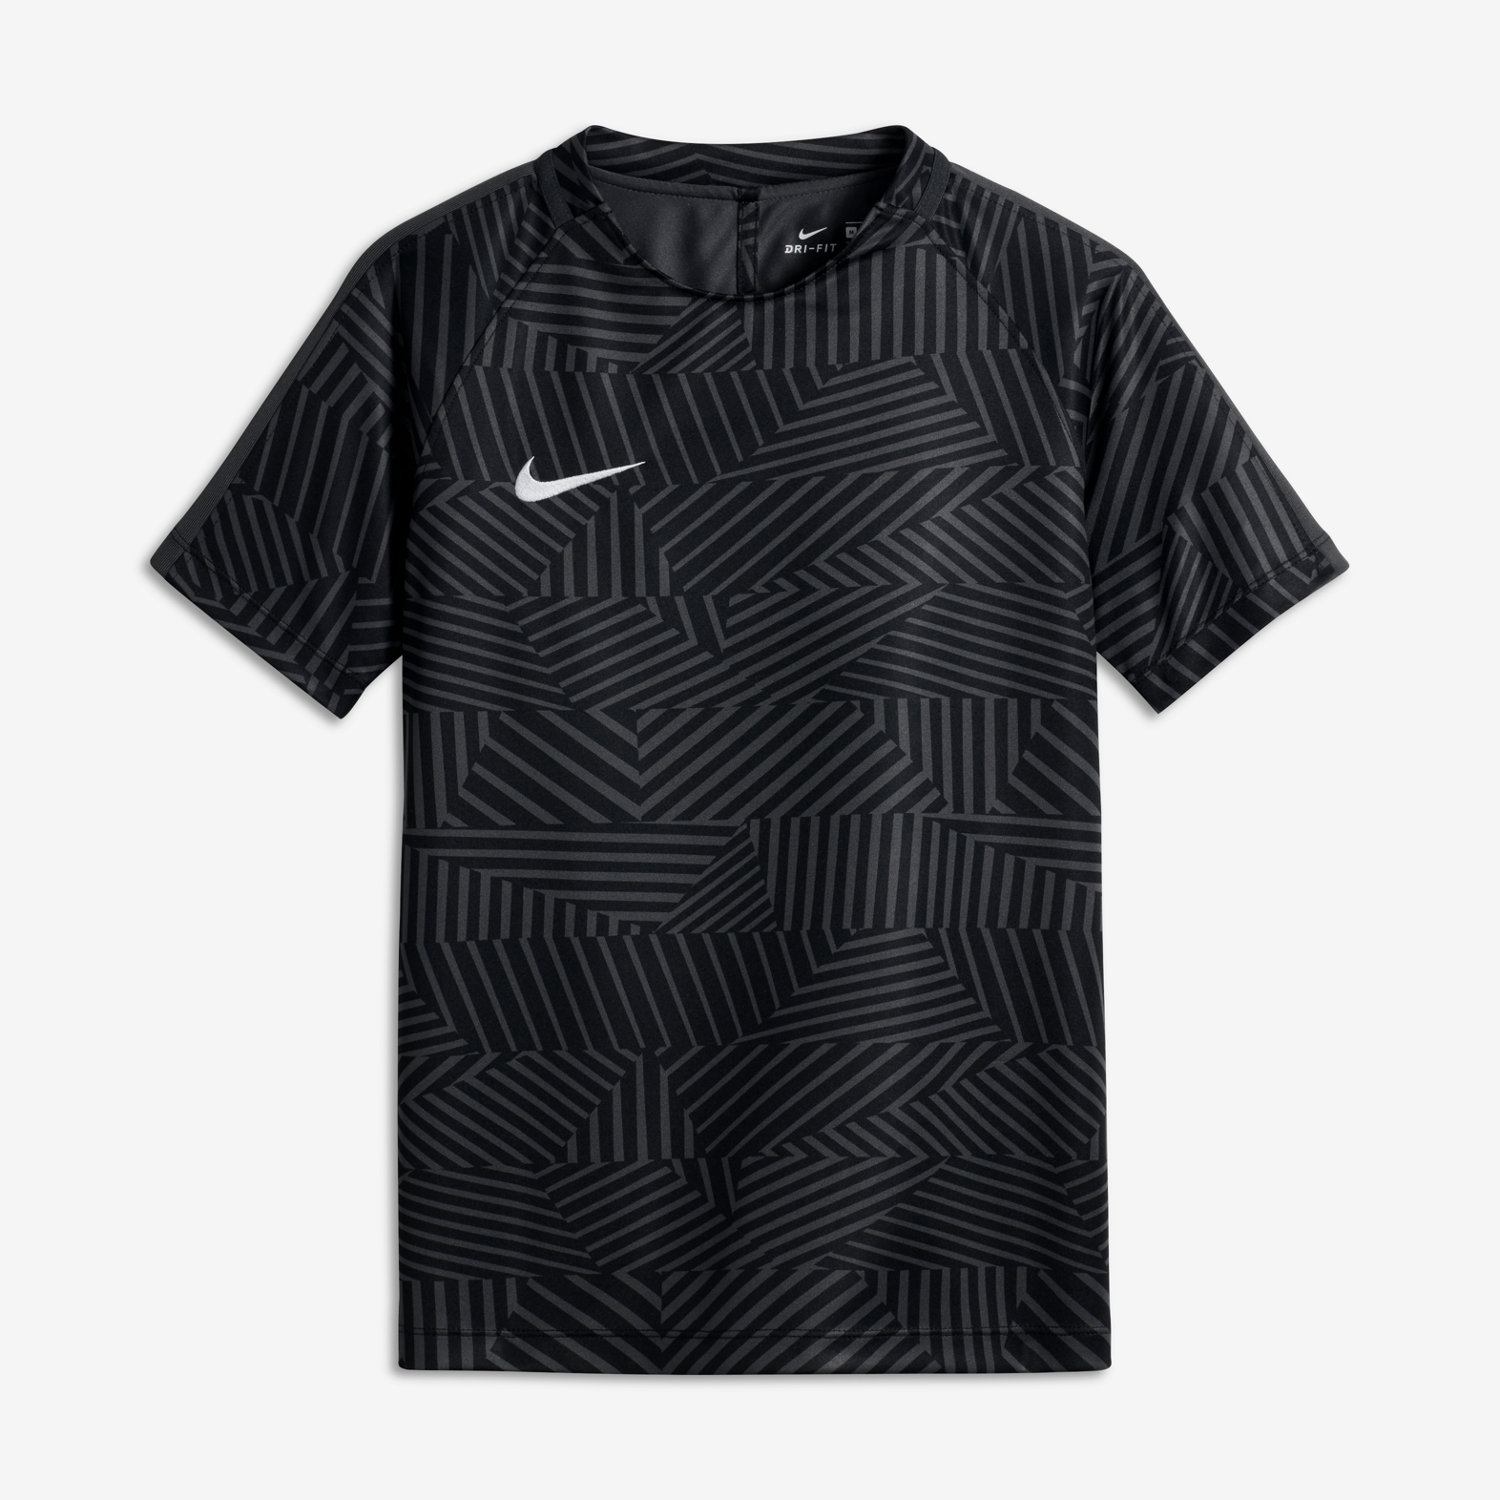 Nike Dry Squad - Older Kids' Short Sleeve Football Top